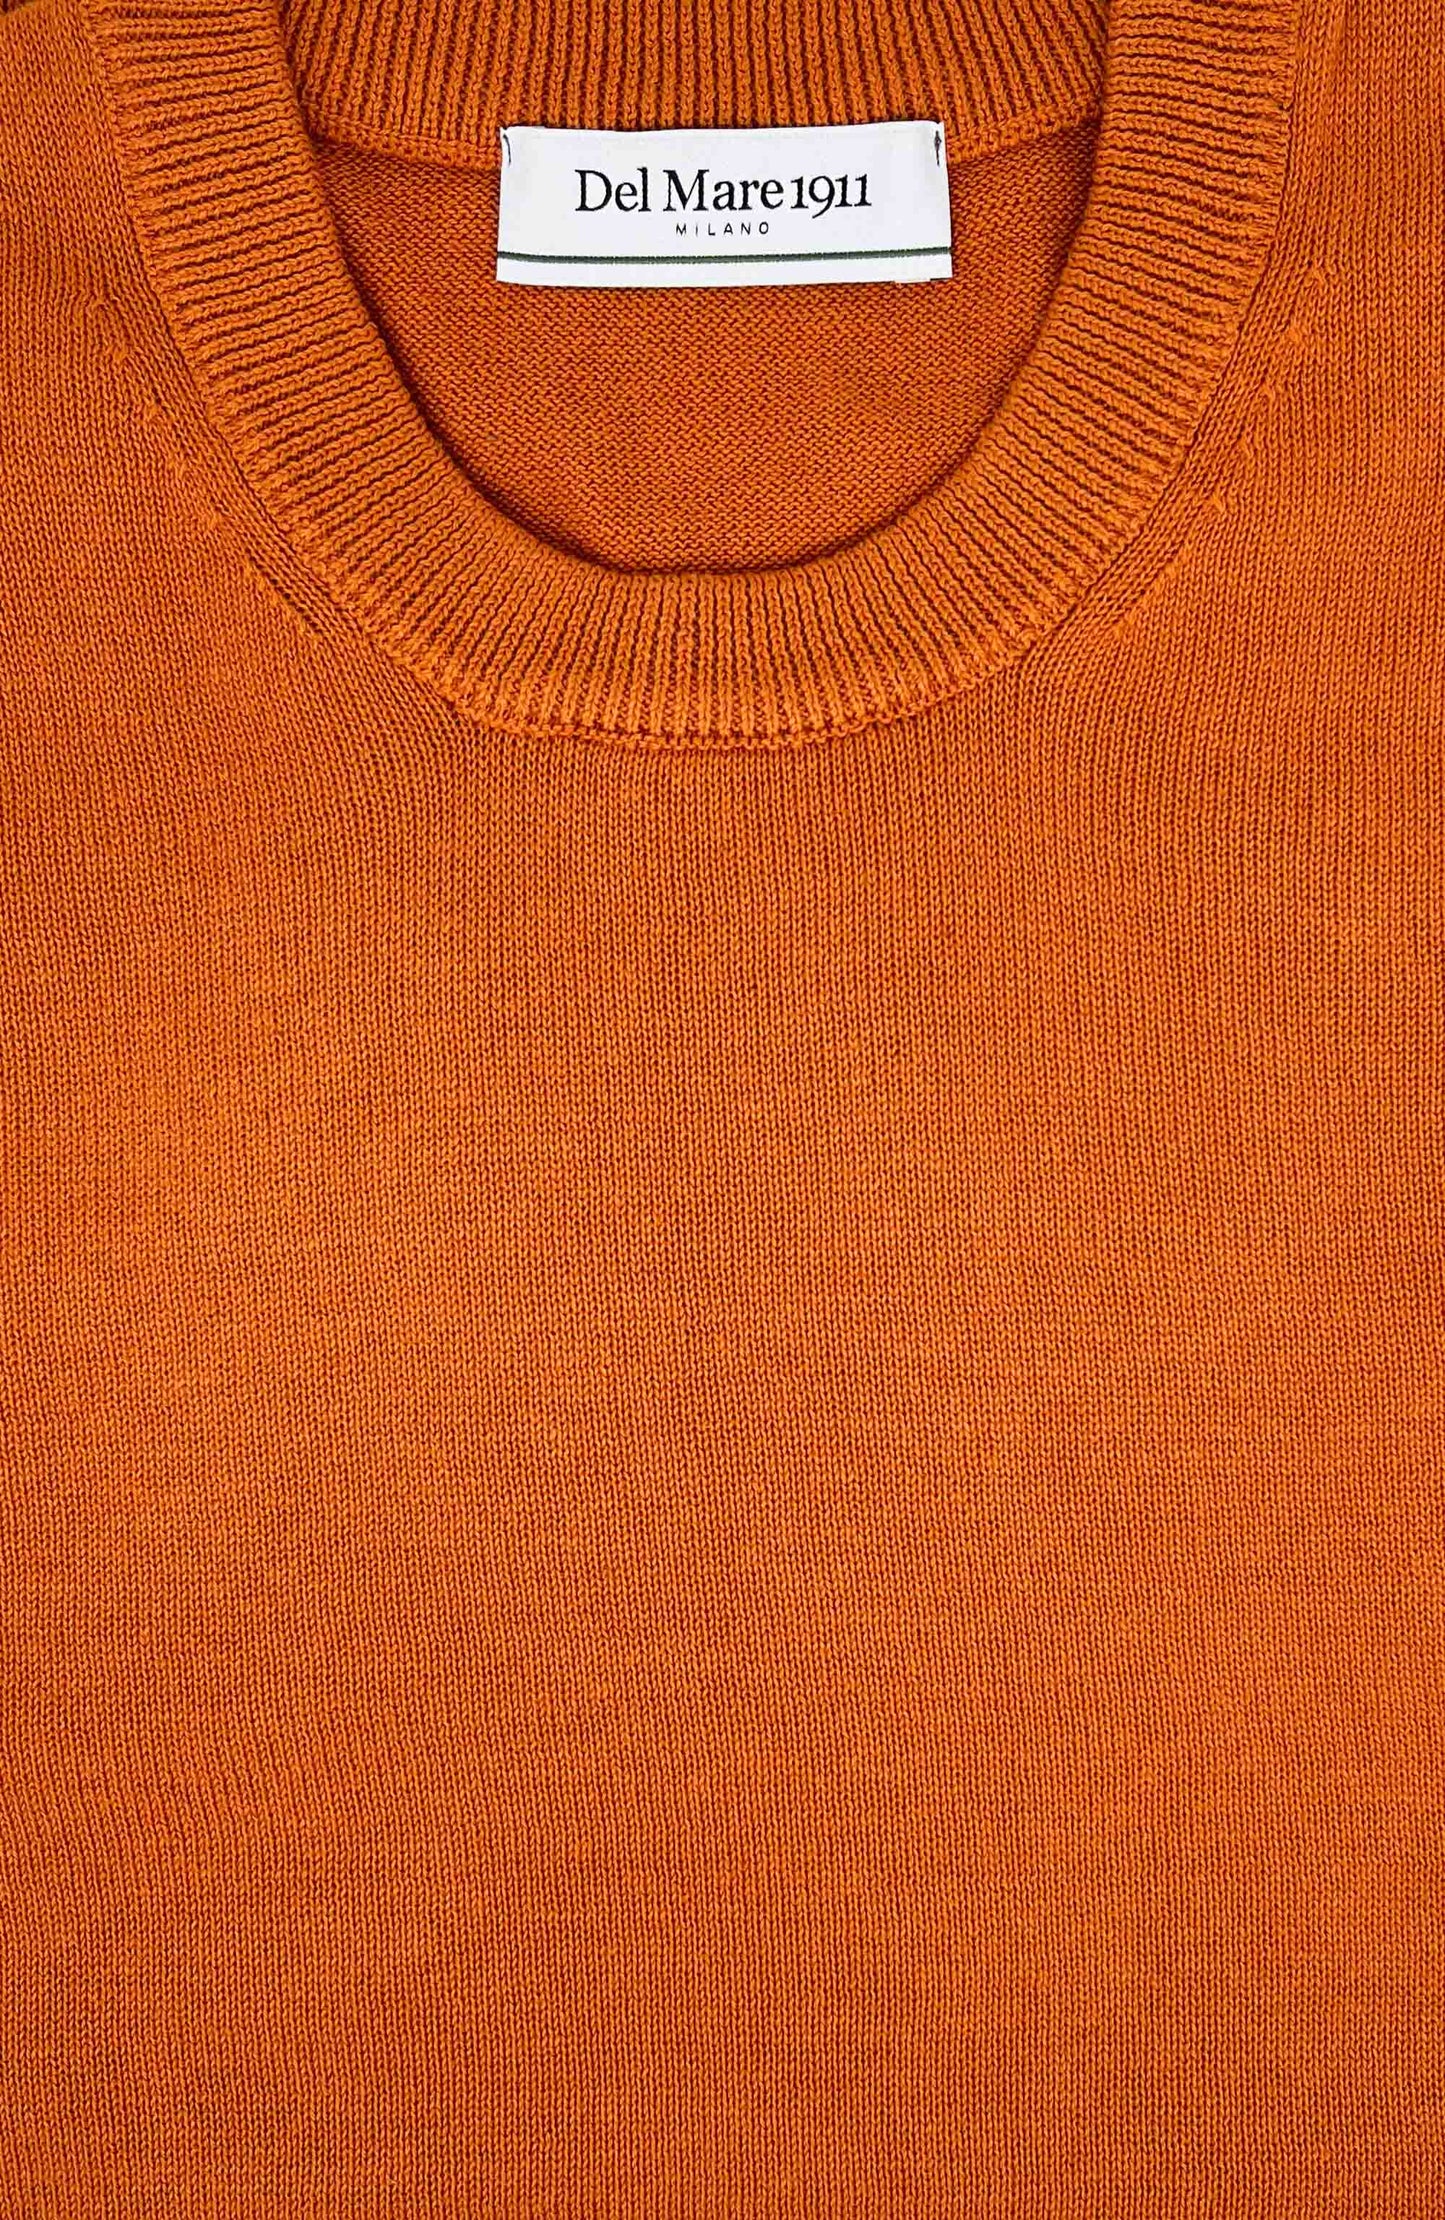 Girocollo uomo arancio in cotone particolare